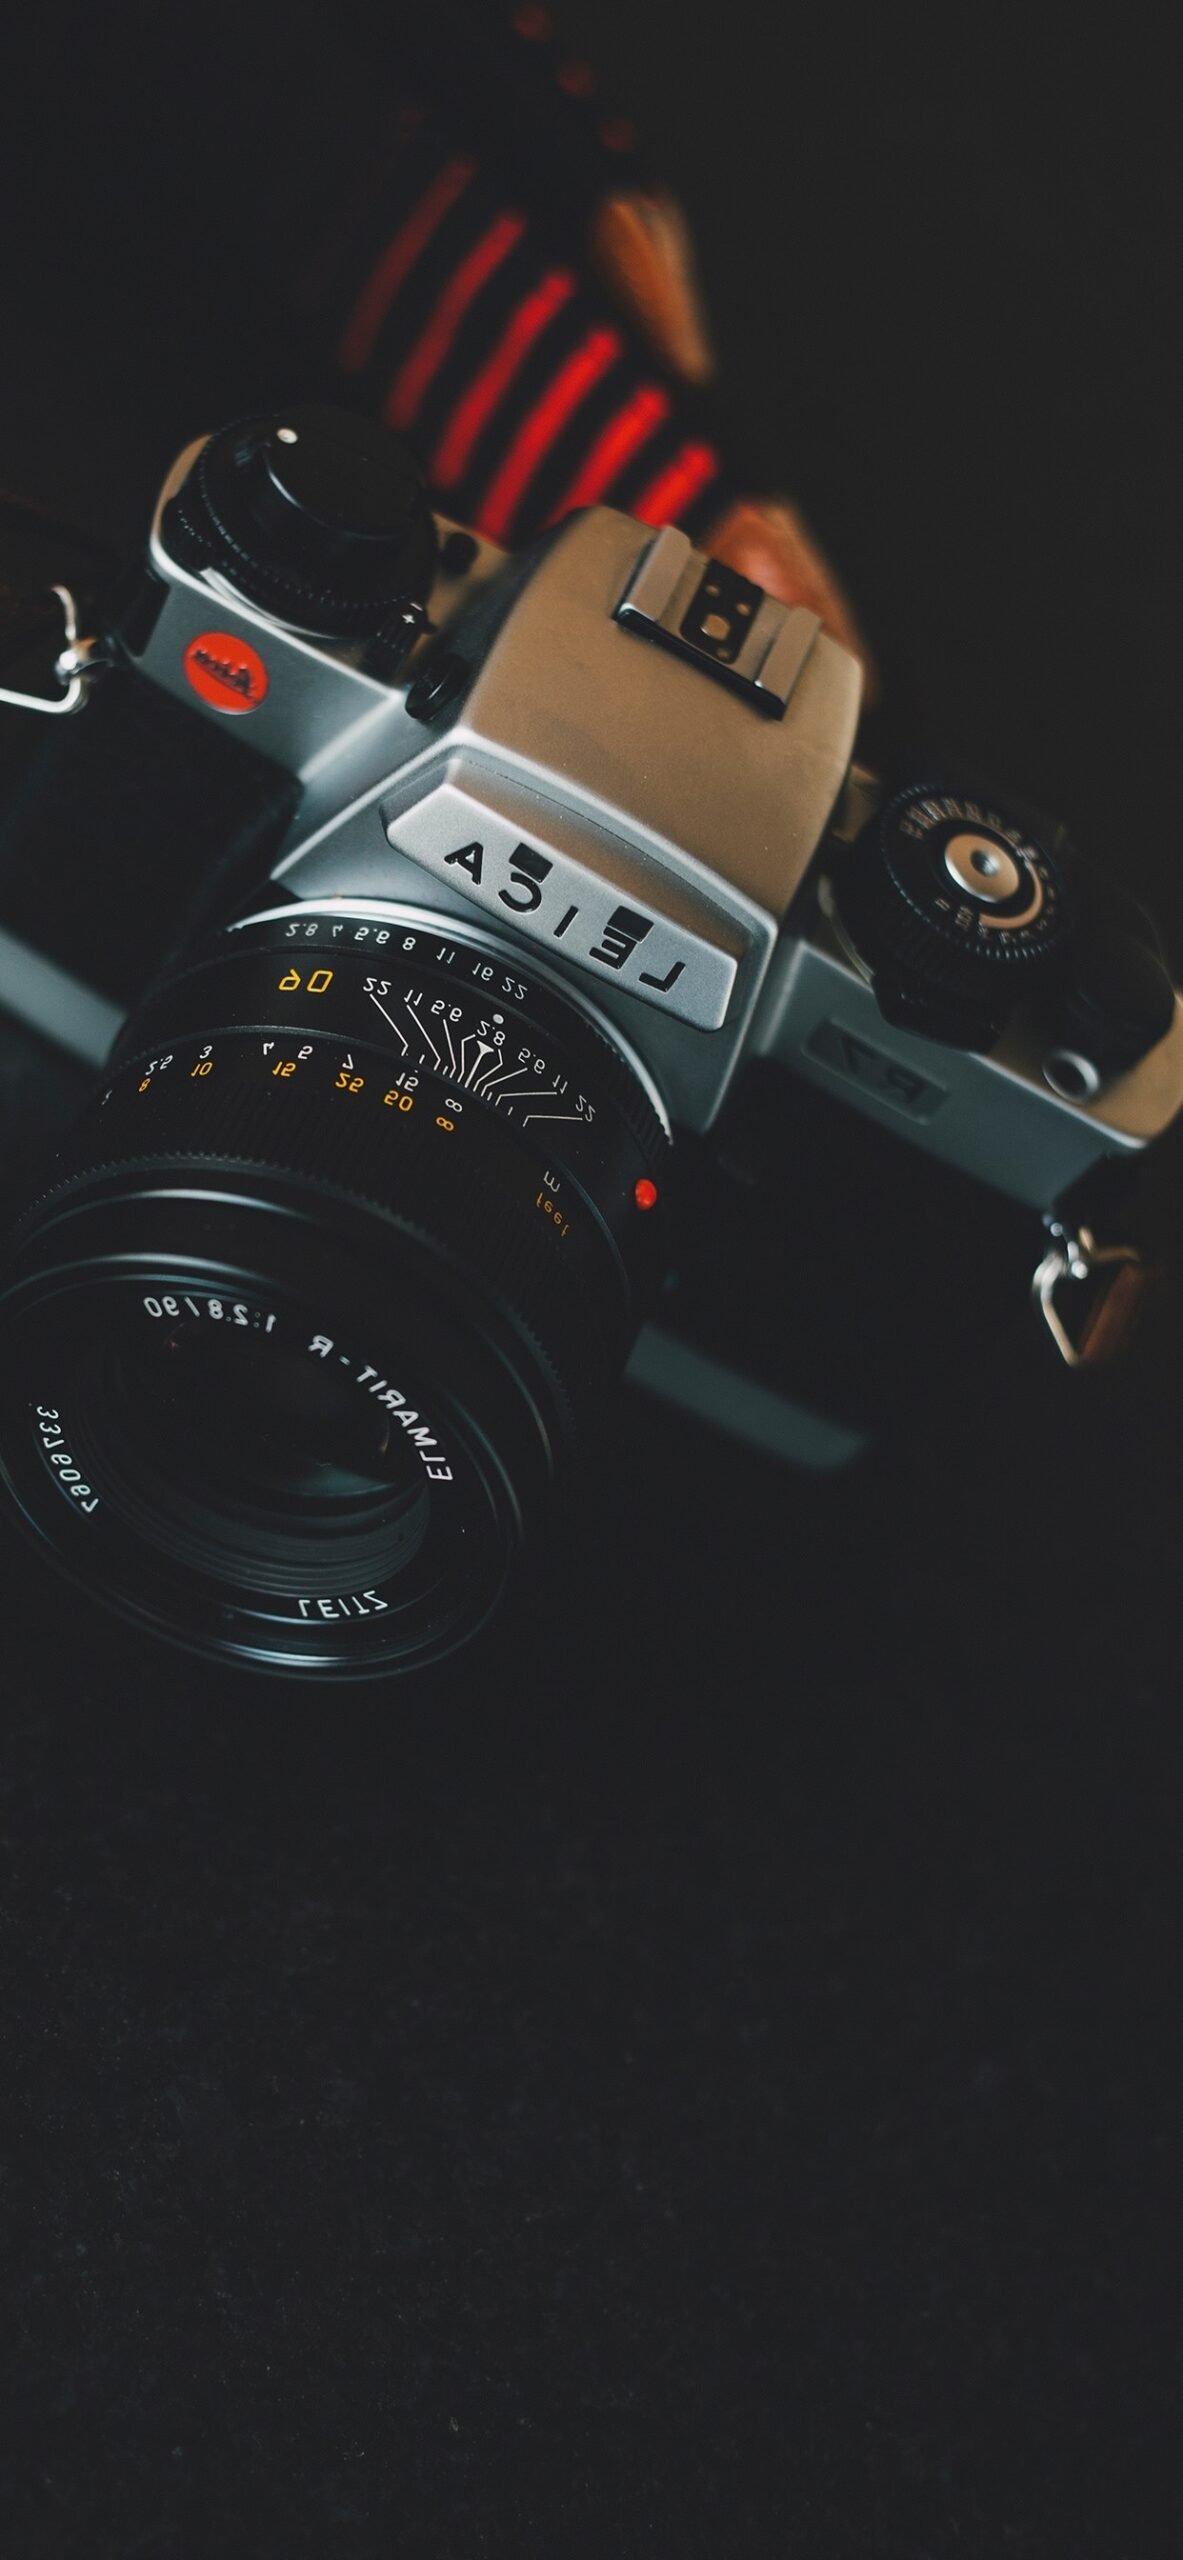 Photography Camera Closeup Image | HD Wallpapers